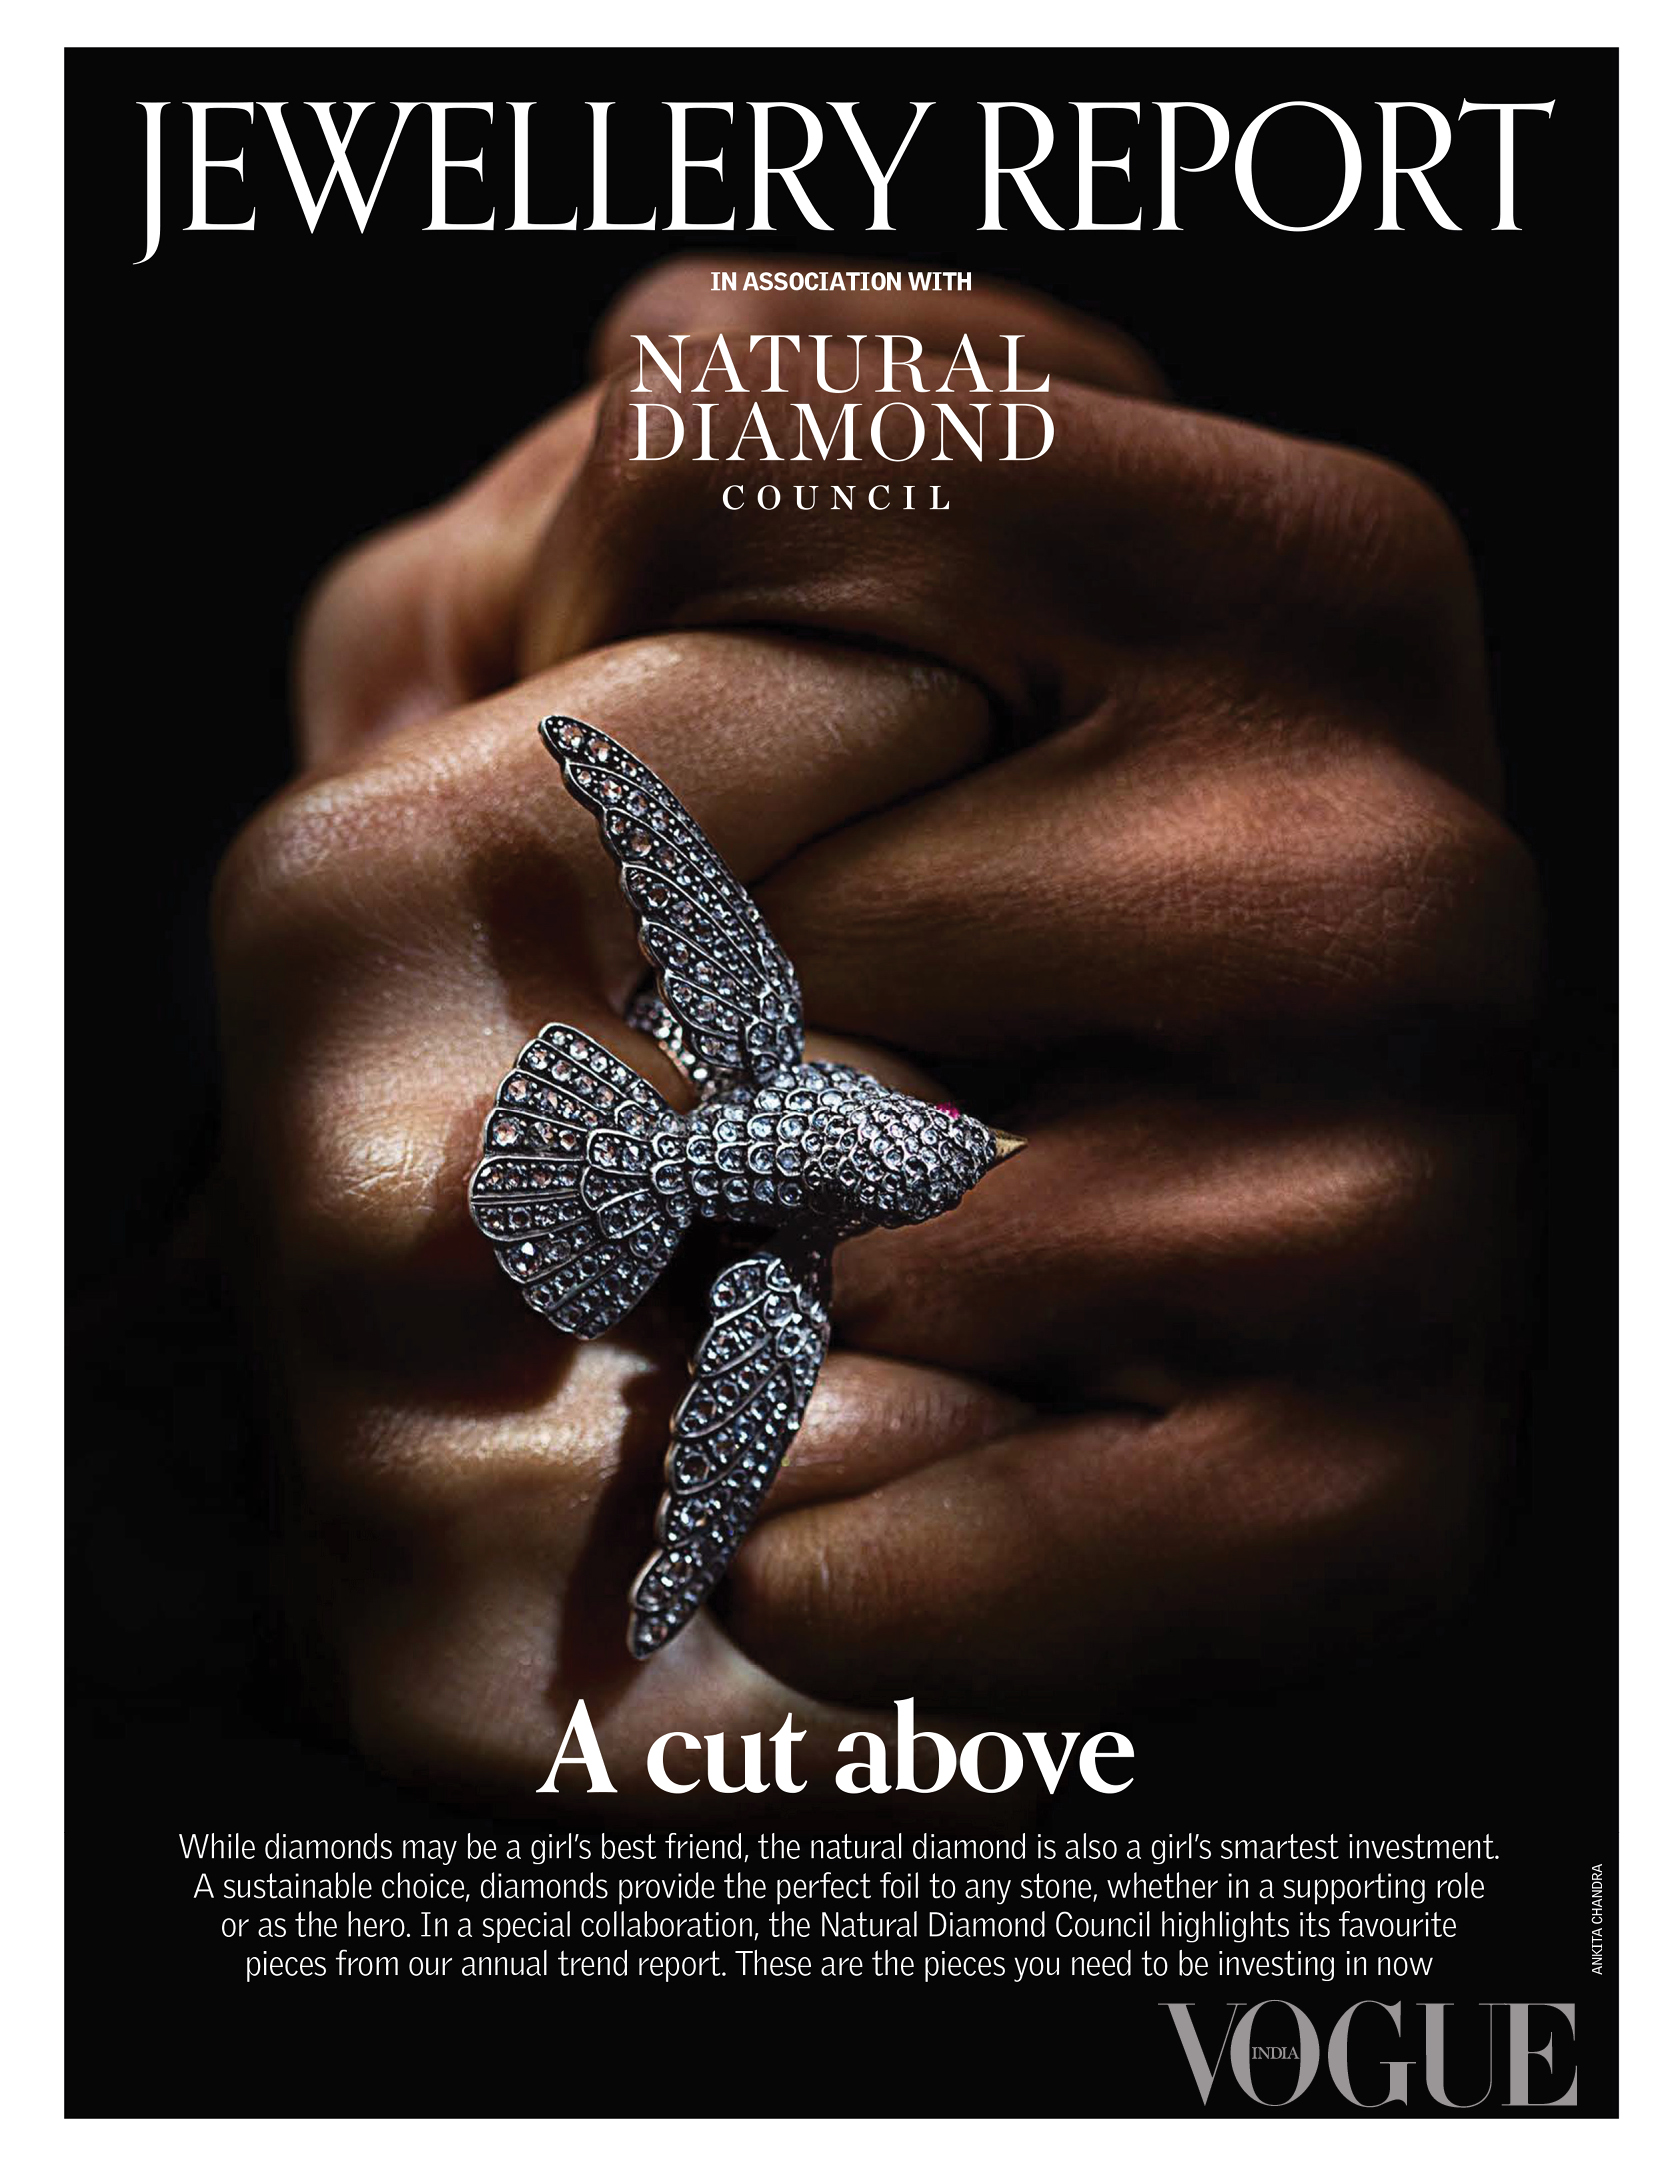 Jewellery Report - Vogue - Natural diamond council
